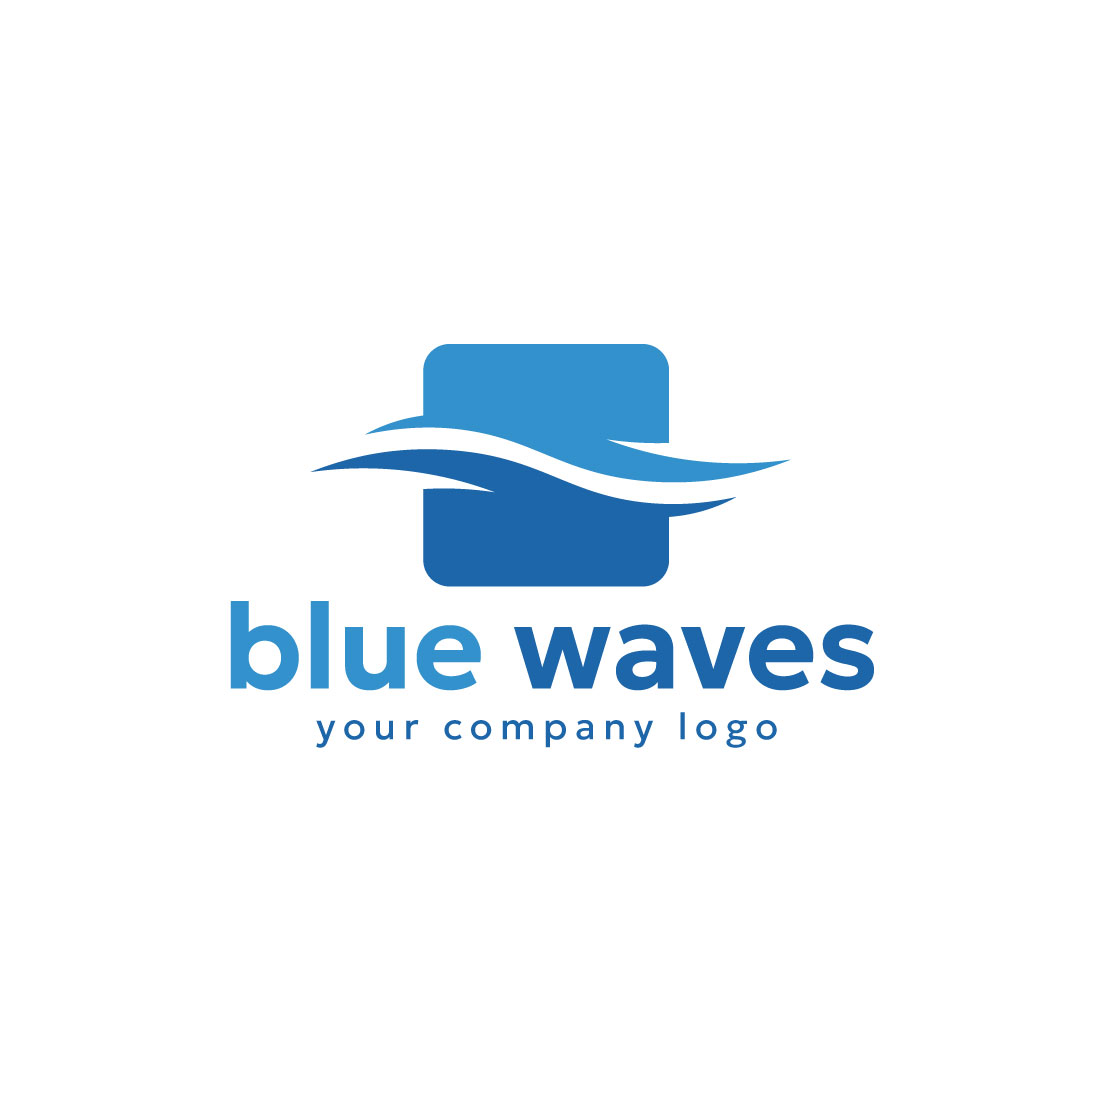 Professional Blue Waves Logo design cover image.